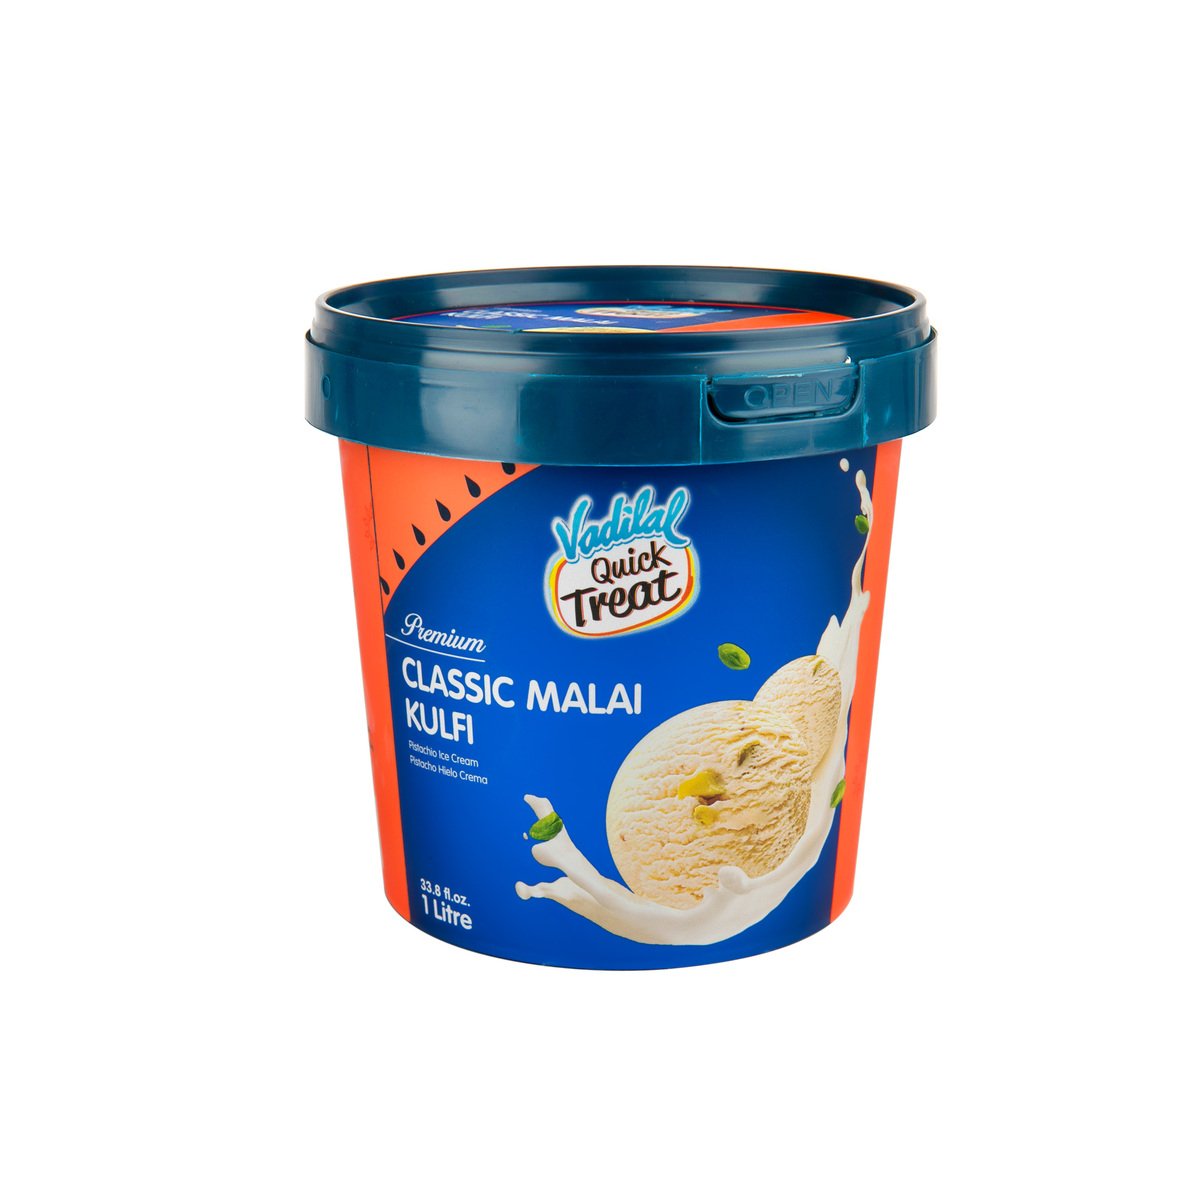 Vadilal Premium Classic Malai Kulfi Ice Cream 1 Litre